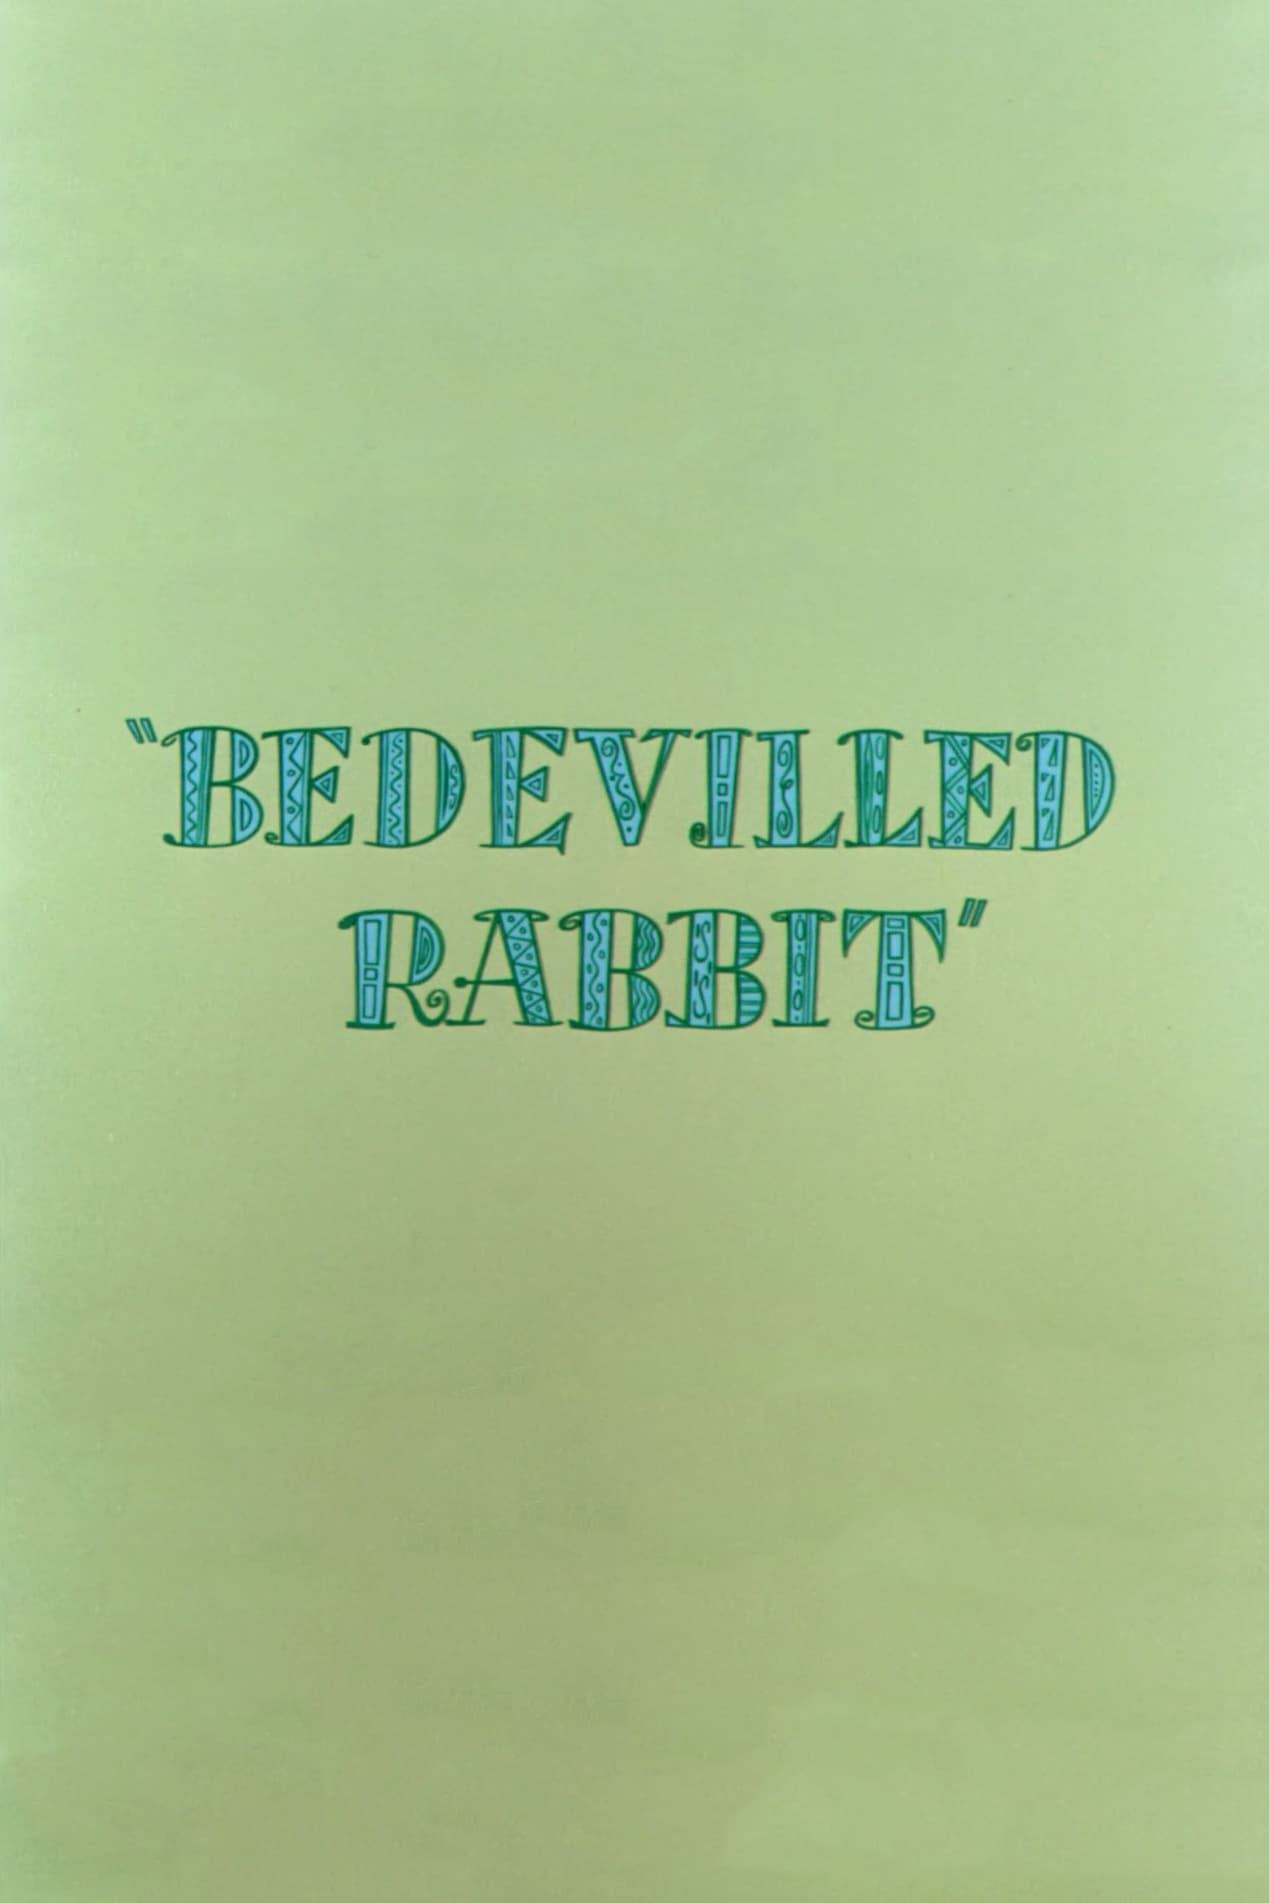 Bedevilled Rabbit